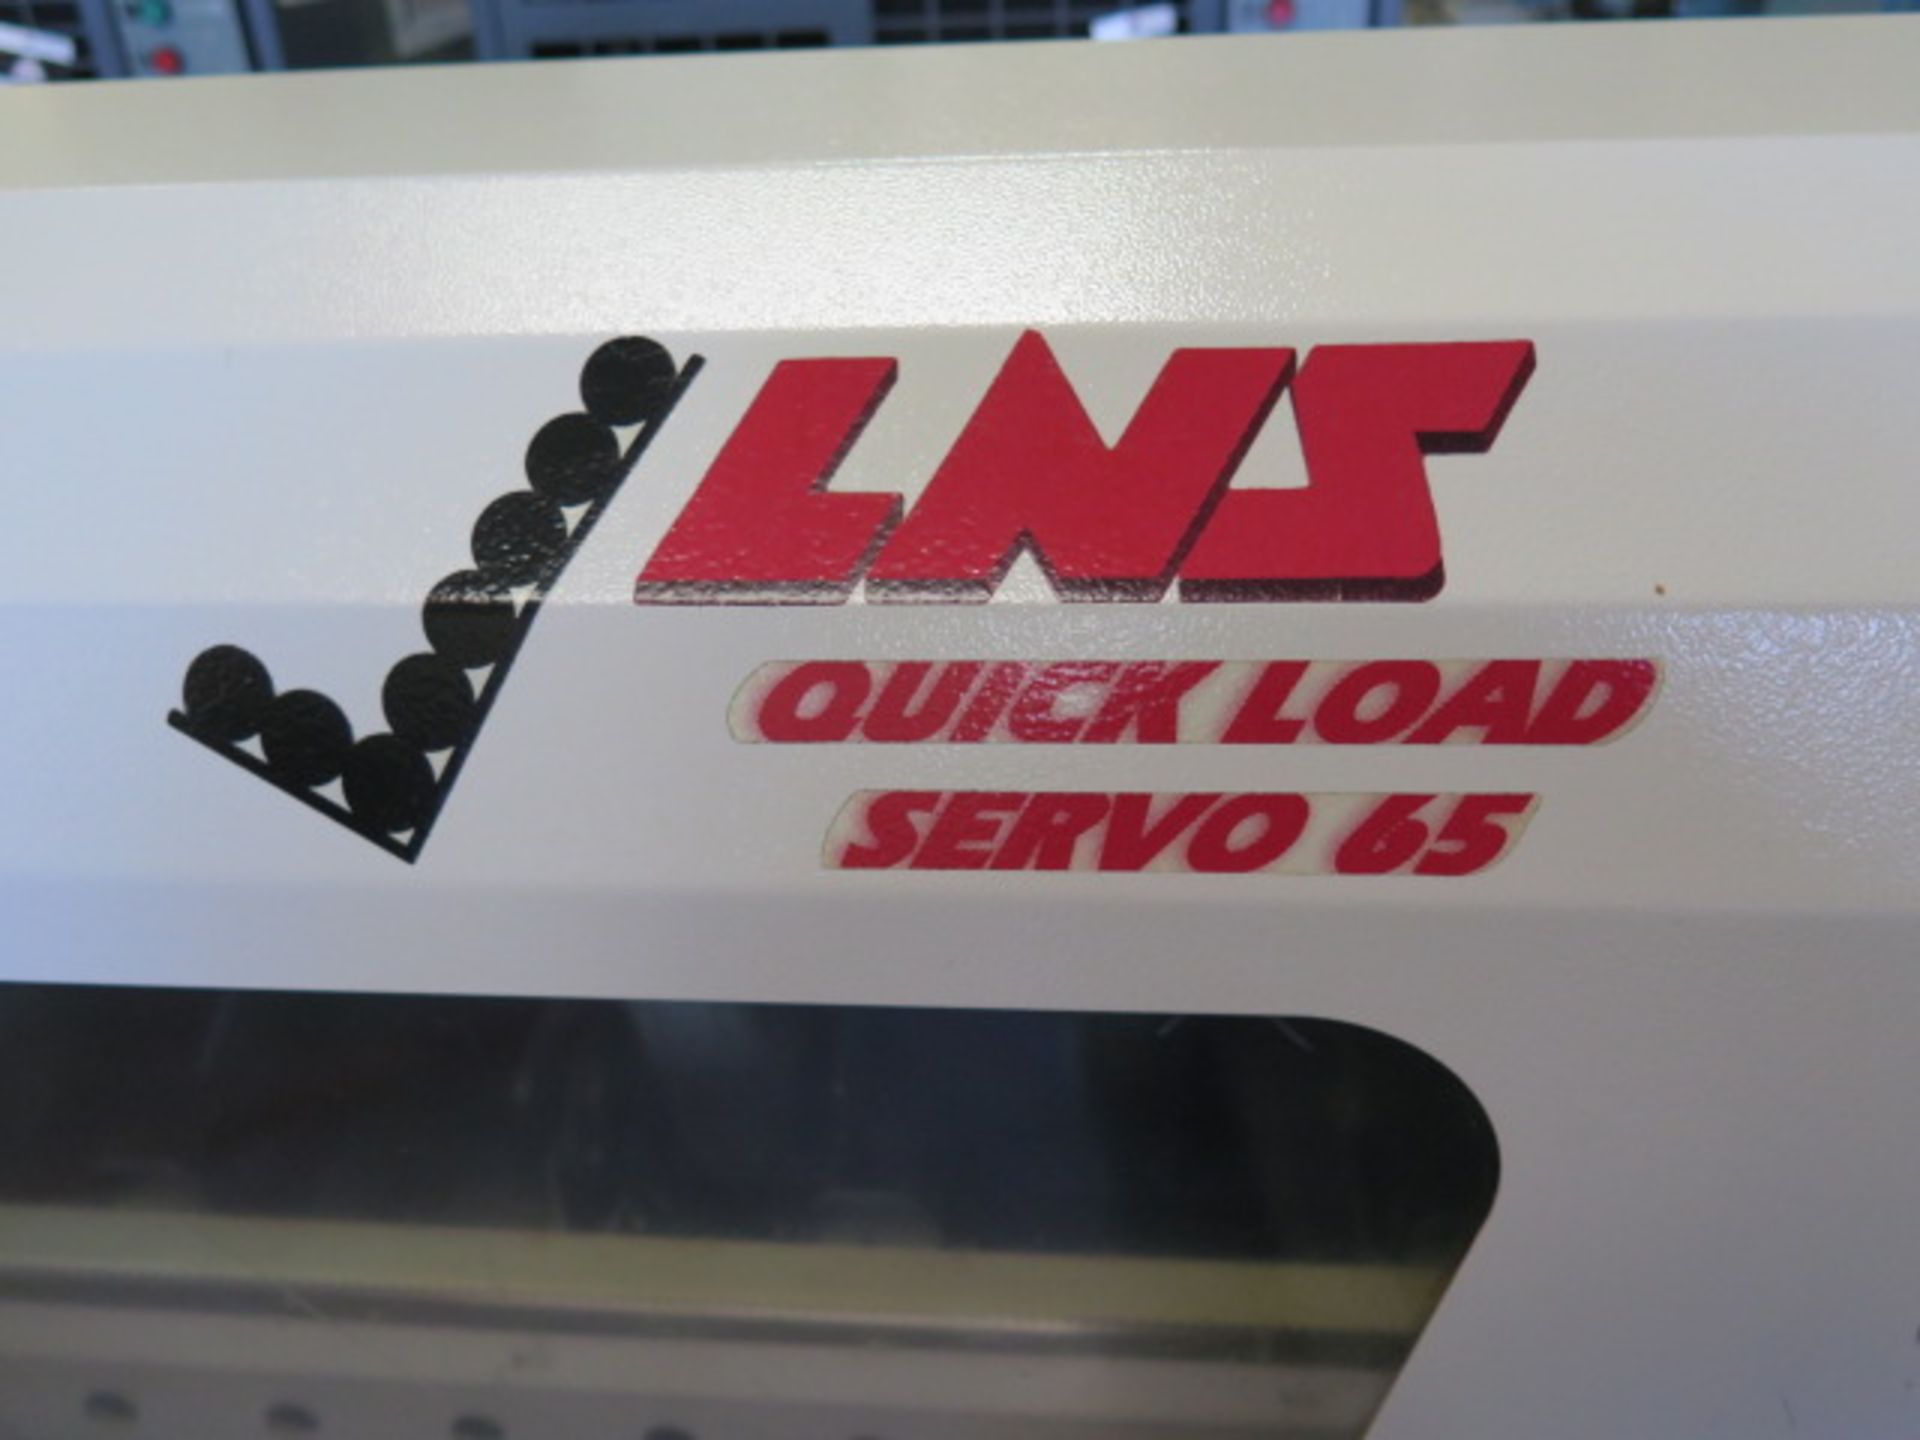 LNS Quick Load Servo 65 Automatic Bar Loader / Feeder s/n 350692 w/ LNS Digital Controls (SOLD AS-IS - Image 3 of 7